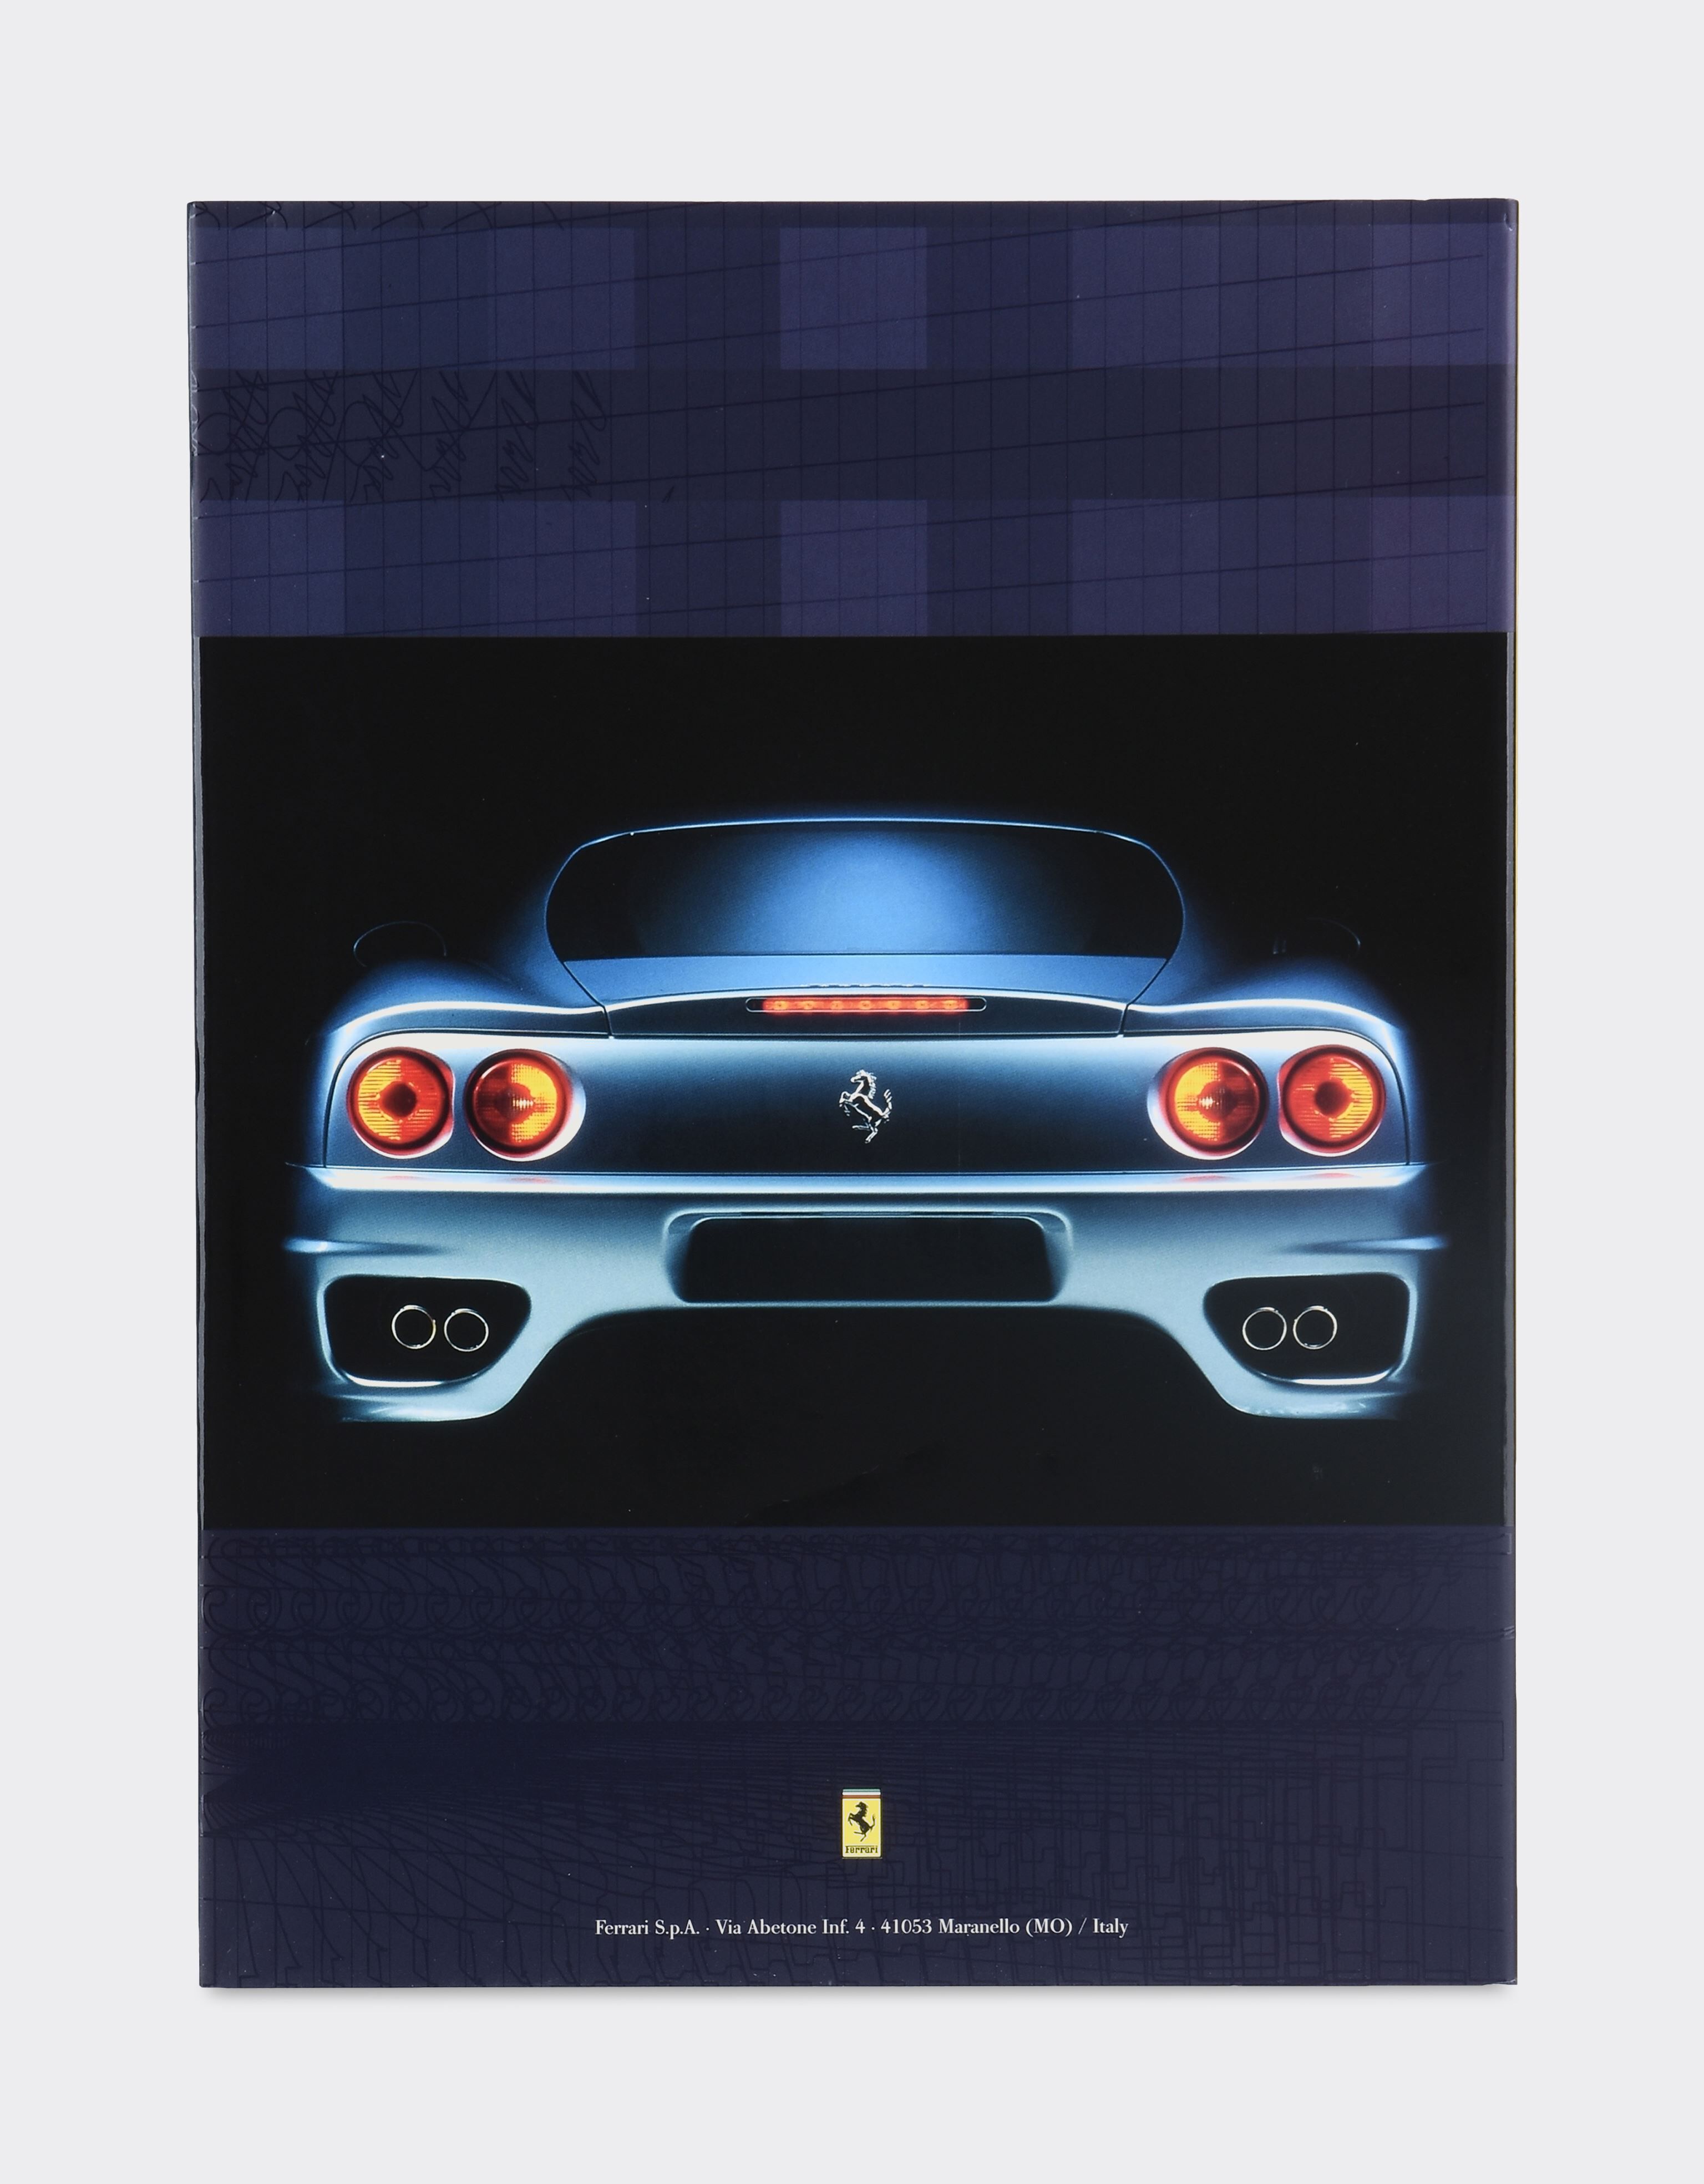 Ferrari Ferrari-Jahrbuch 1999 MEHRFARBIG 00628f